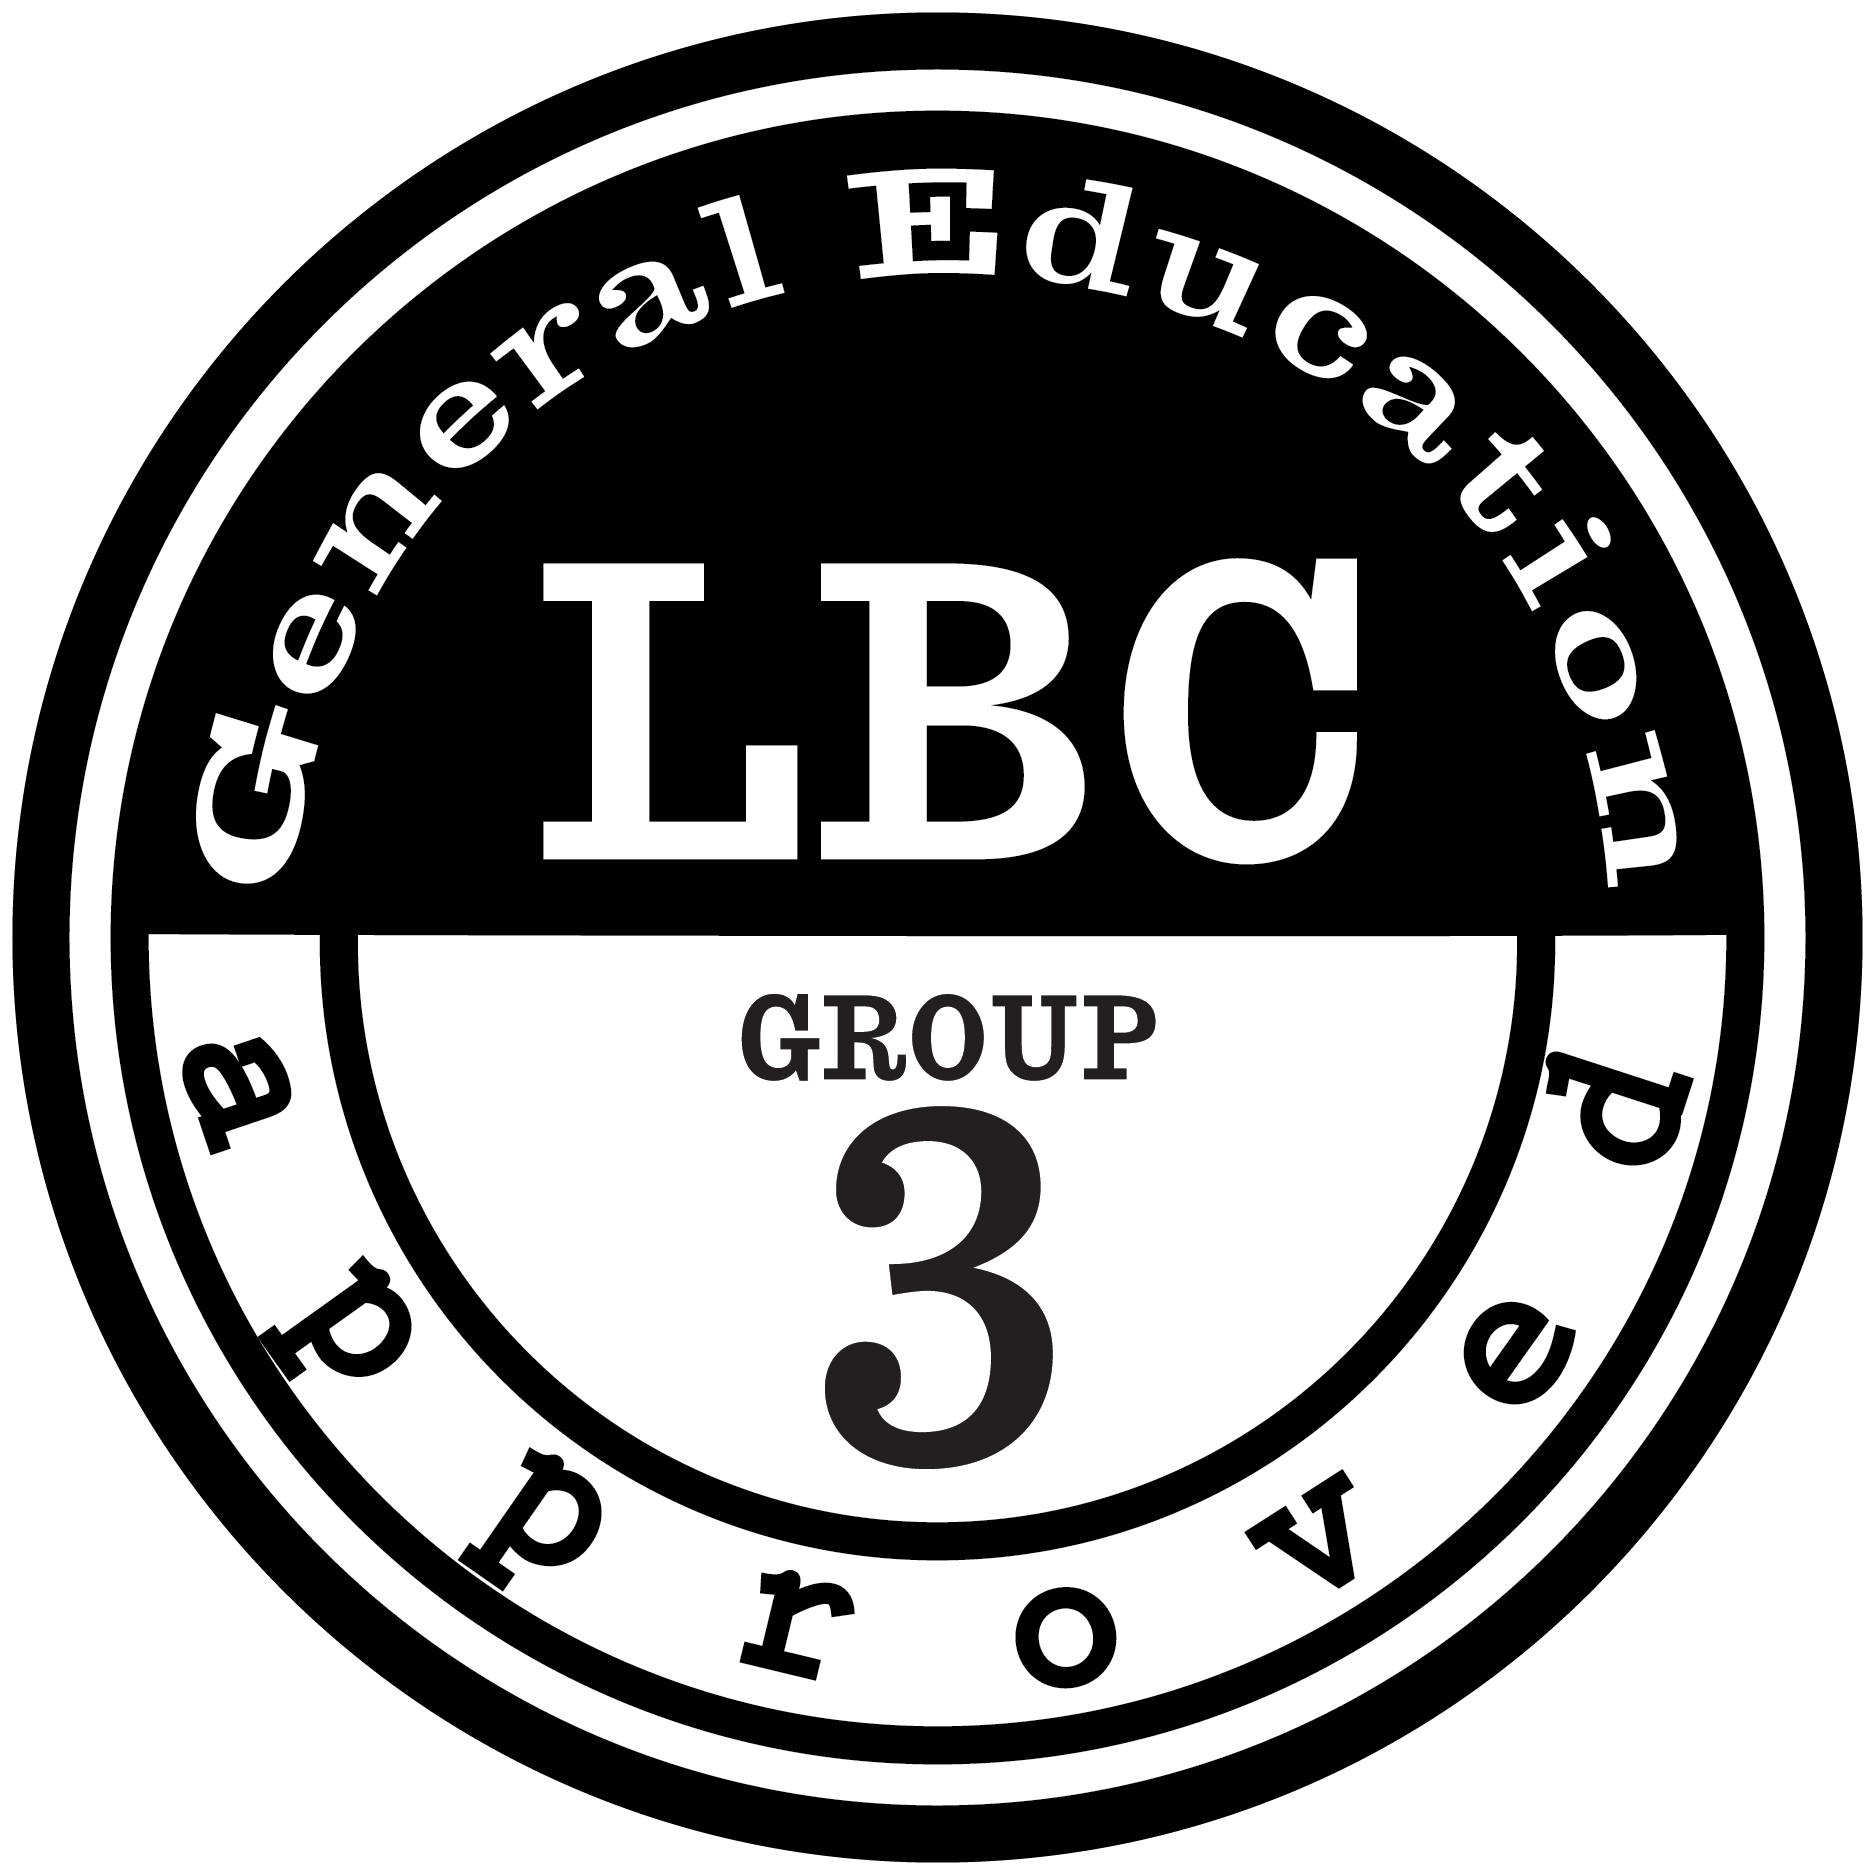 a logo for LBC group 3